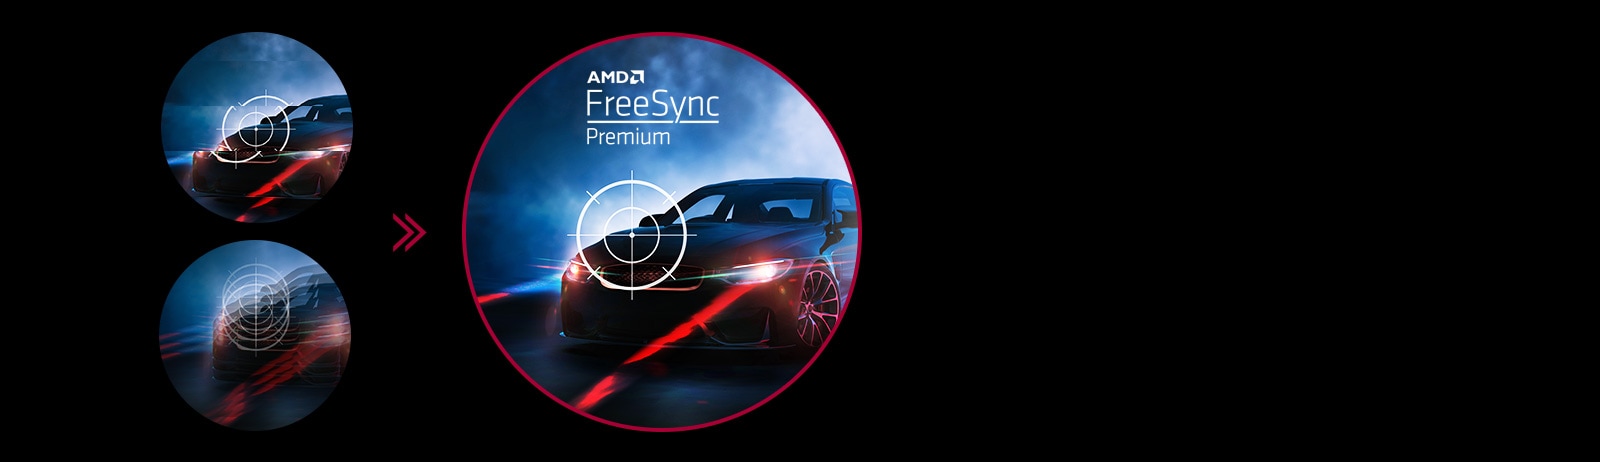 AMD FreeSync™ Premium is Built In